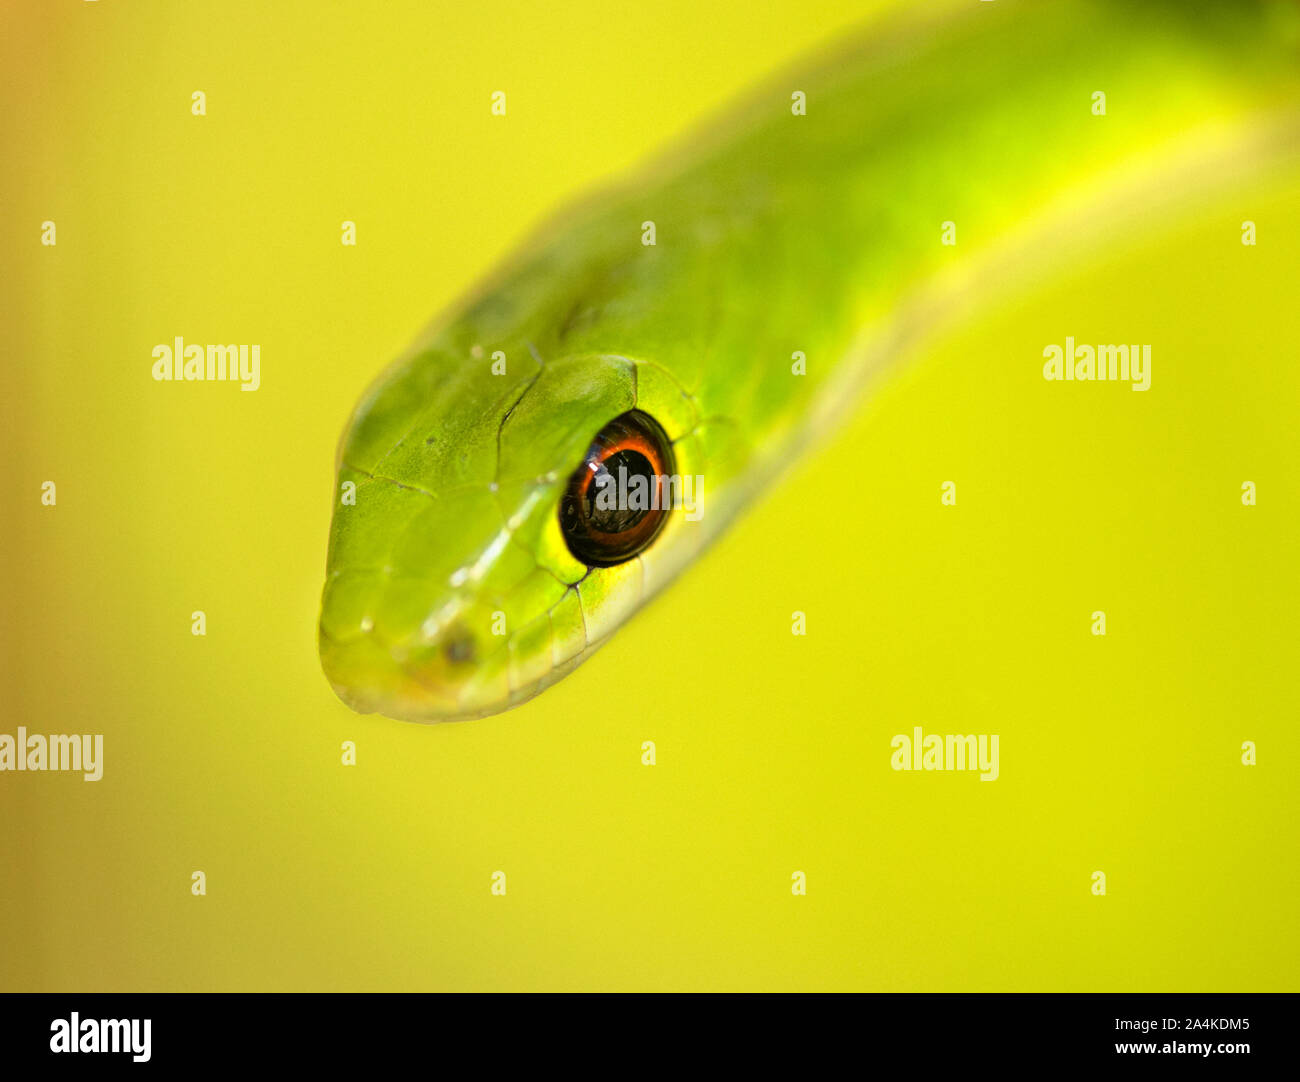 Green tree snake, Masai Mara, Kenya, Africa. Stock Photo